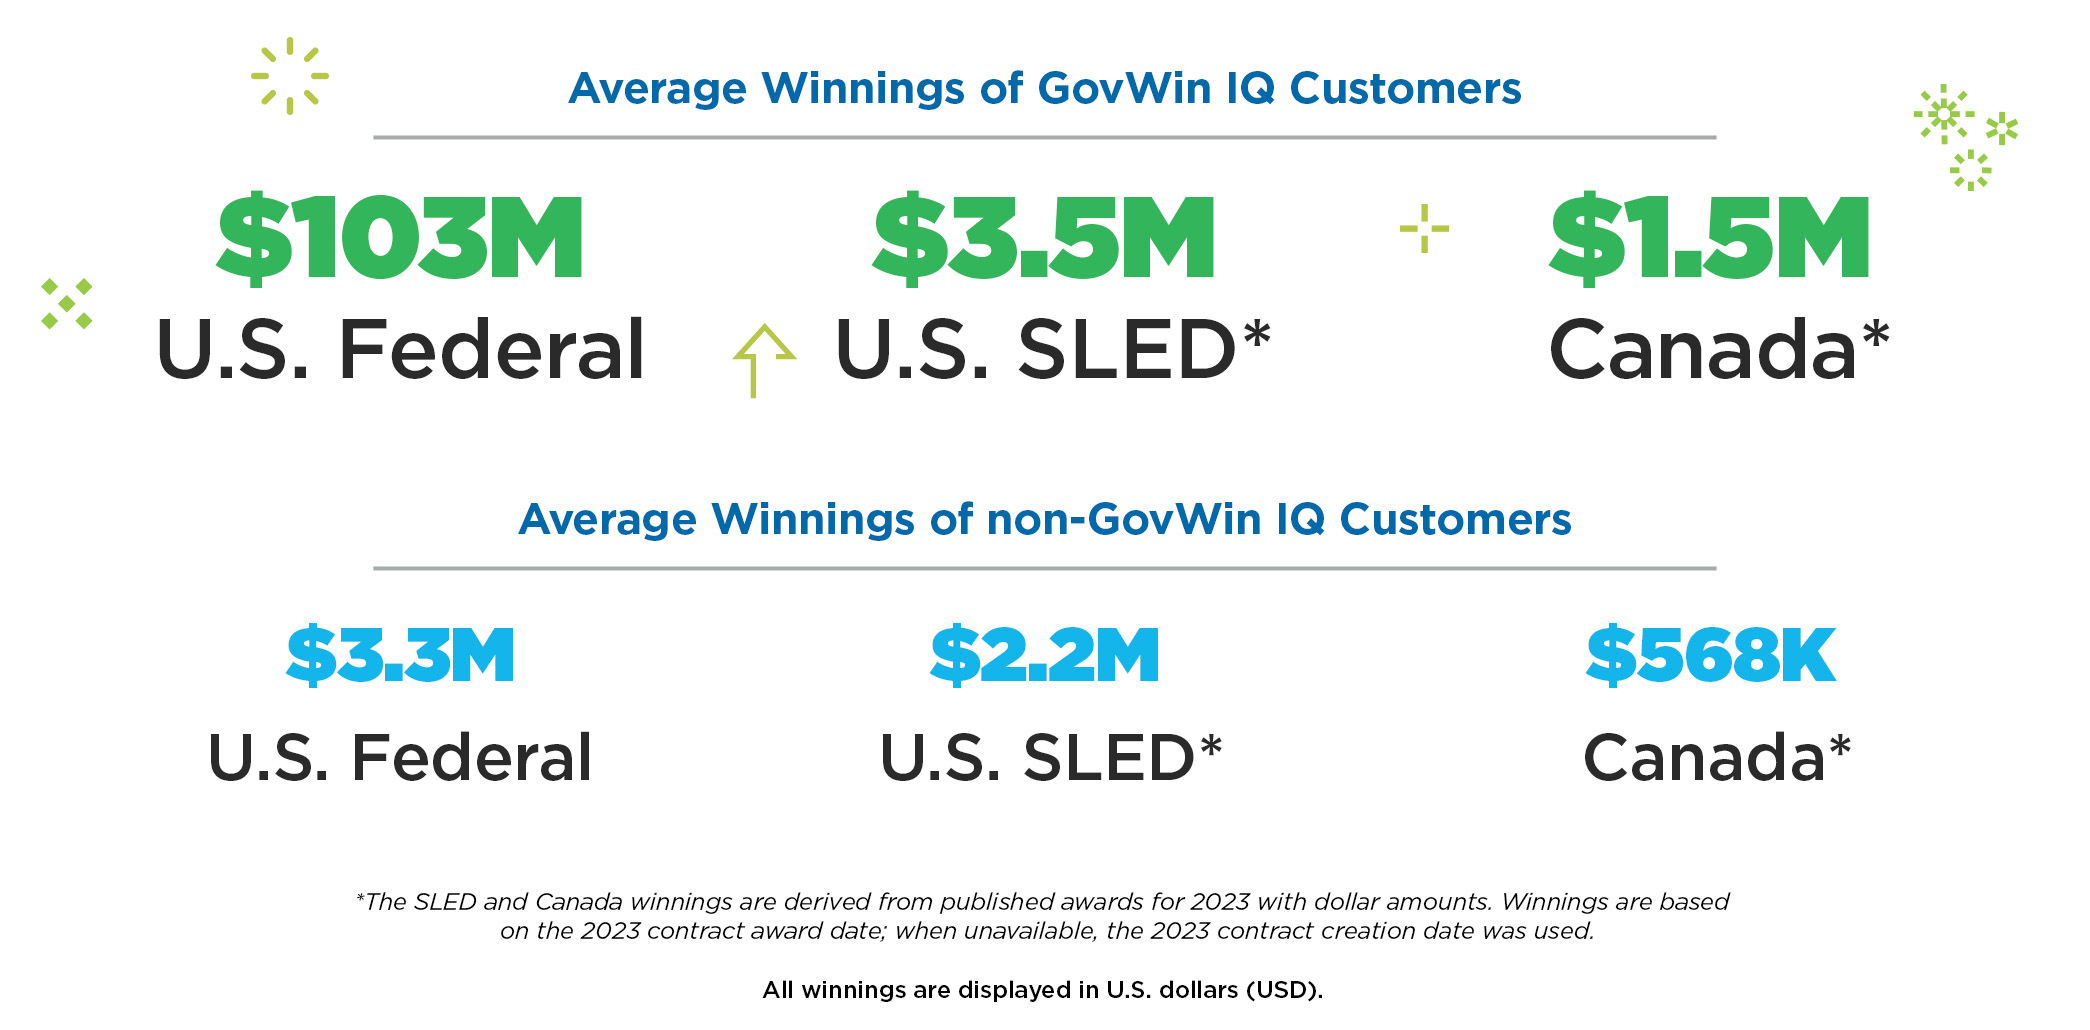 GovWin IQ Customers Win More